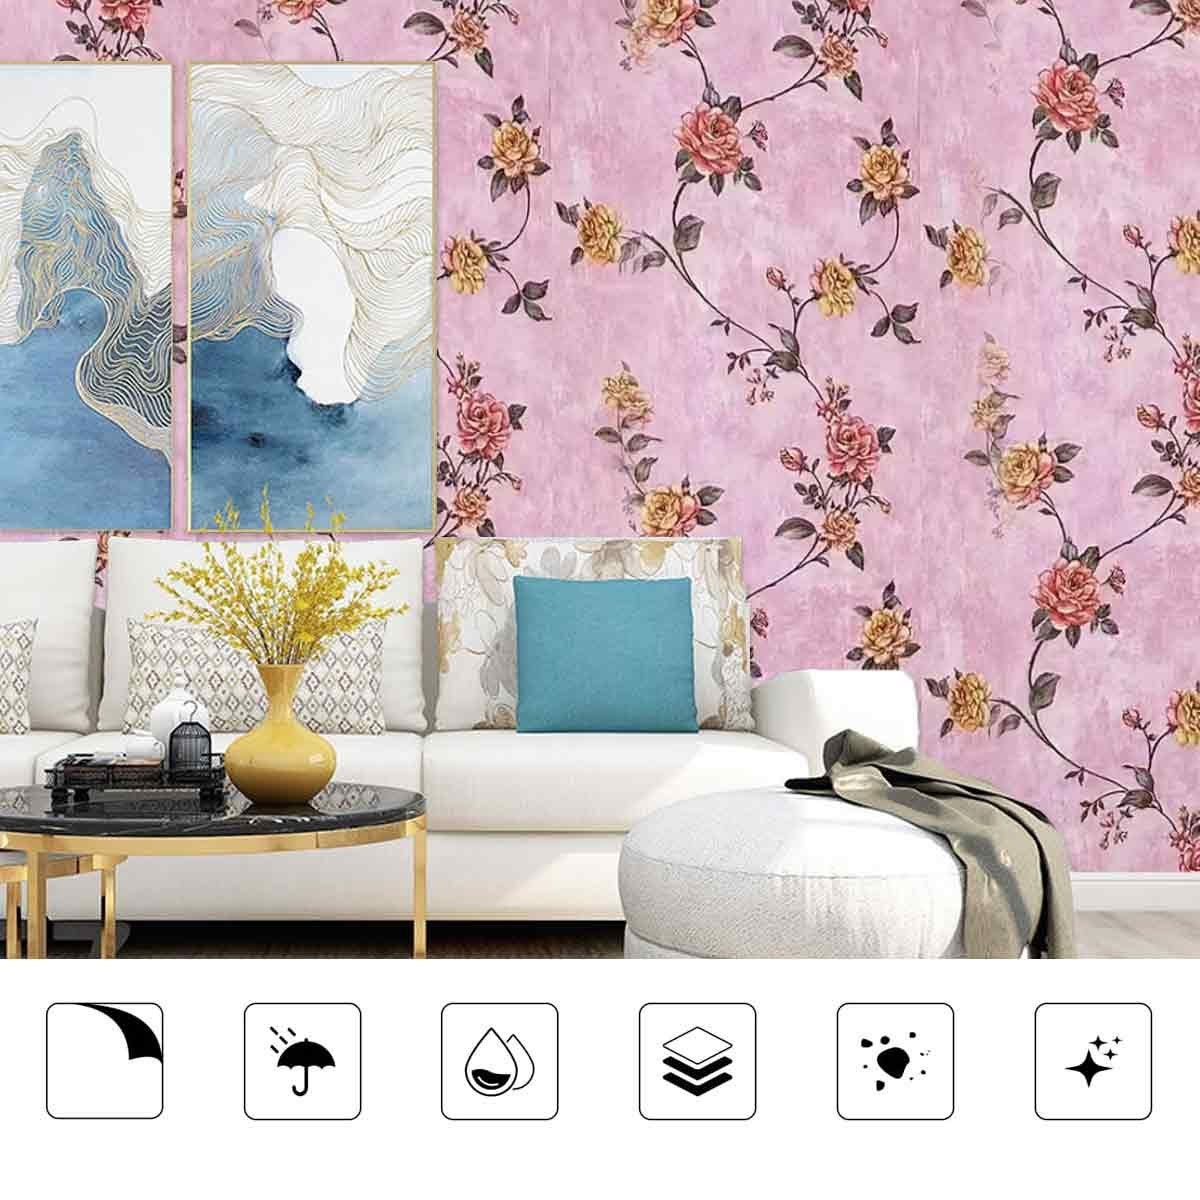 Floral Jormftte Pattern Deko Series Fototapete Tapete,selbstklebende Tapete,für Haus Rosa